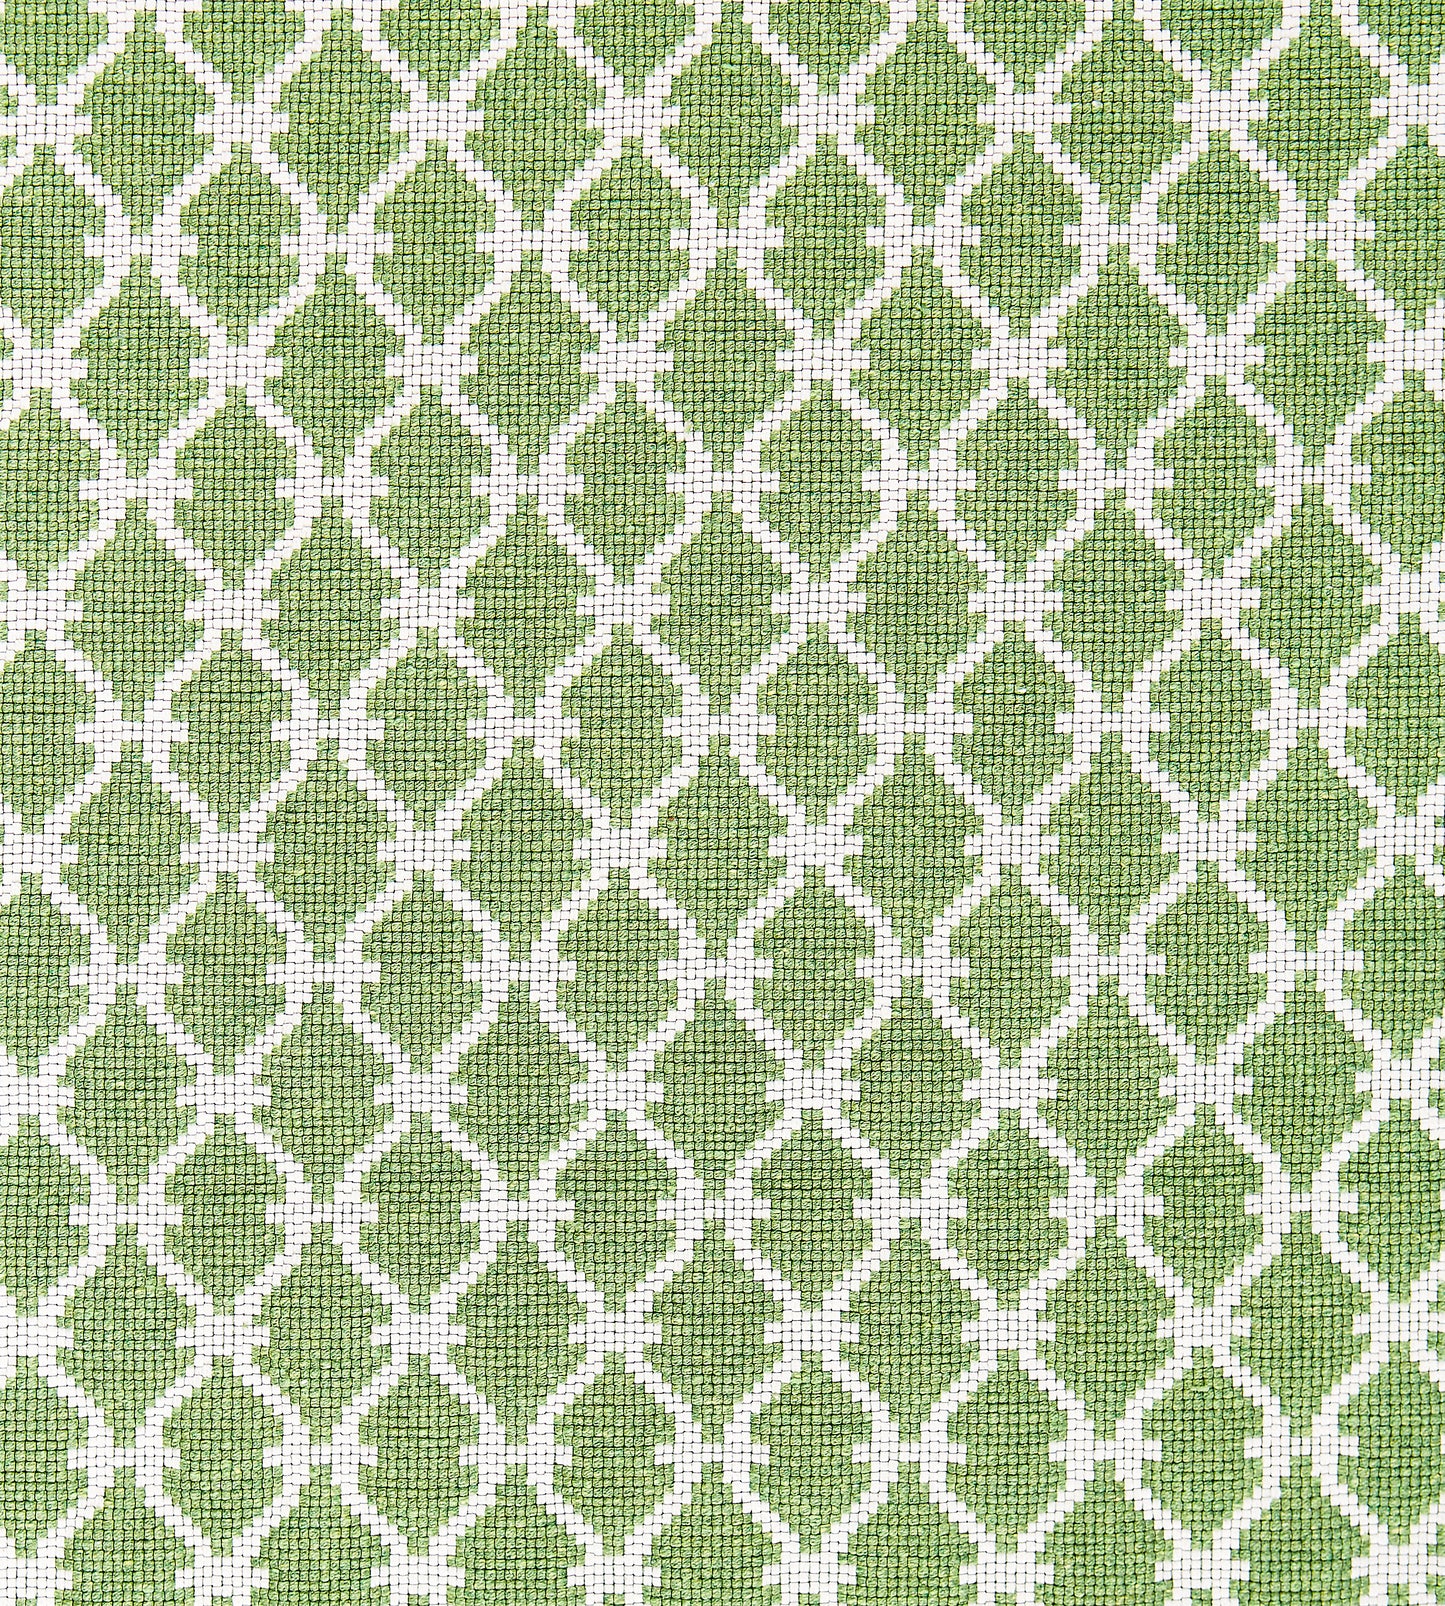 Purchase Scalamandre Fabric Pattern number SC 000427009, Trellis Weave Jade 1